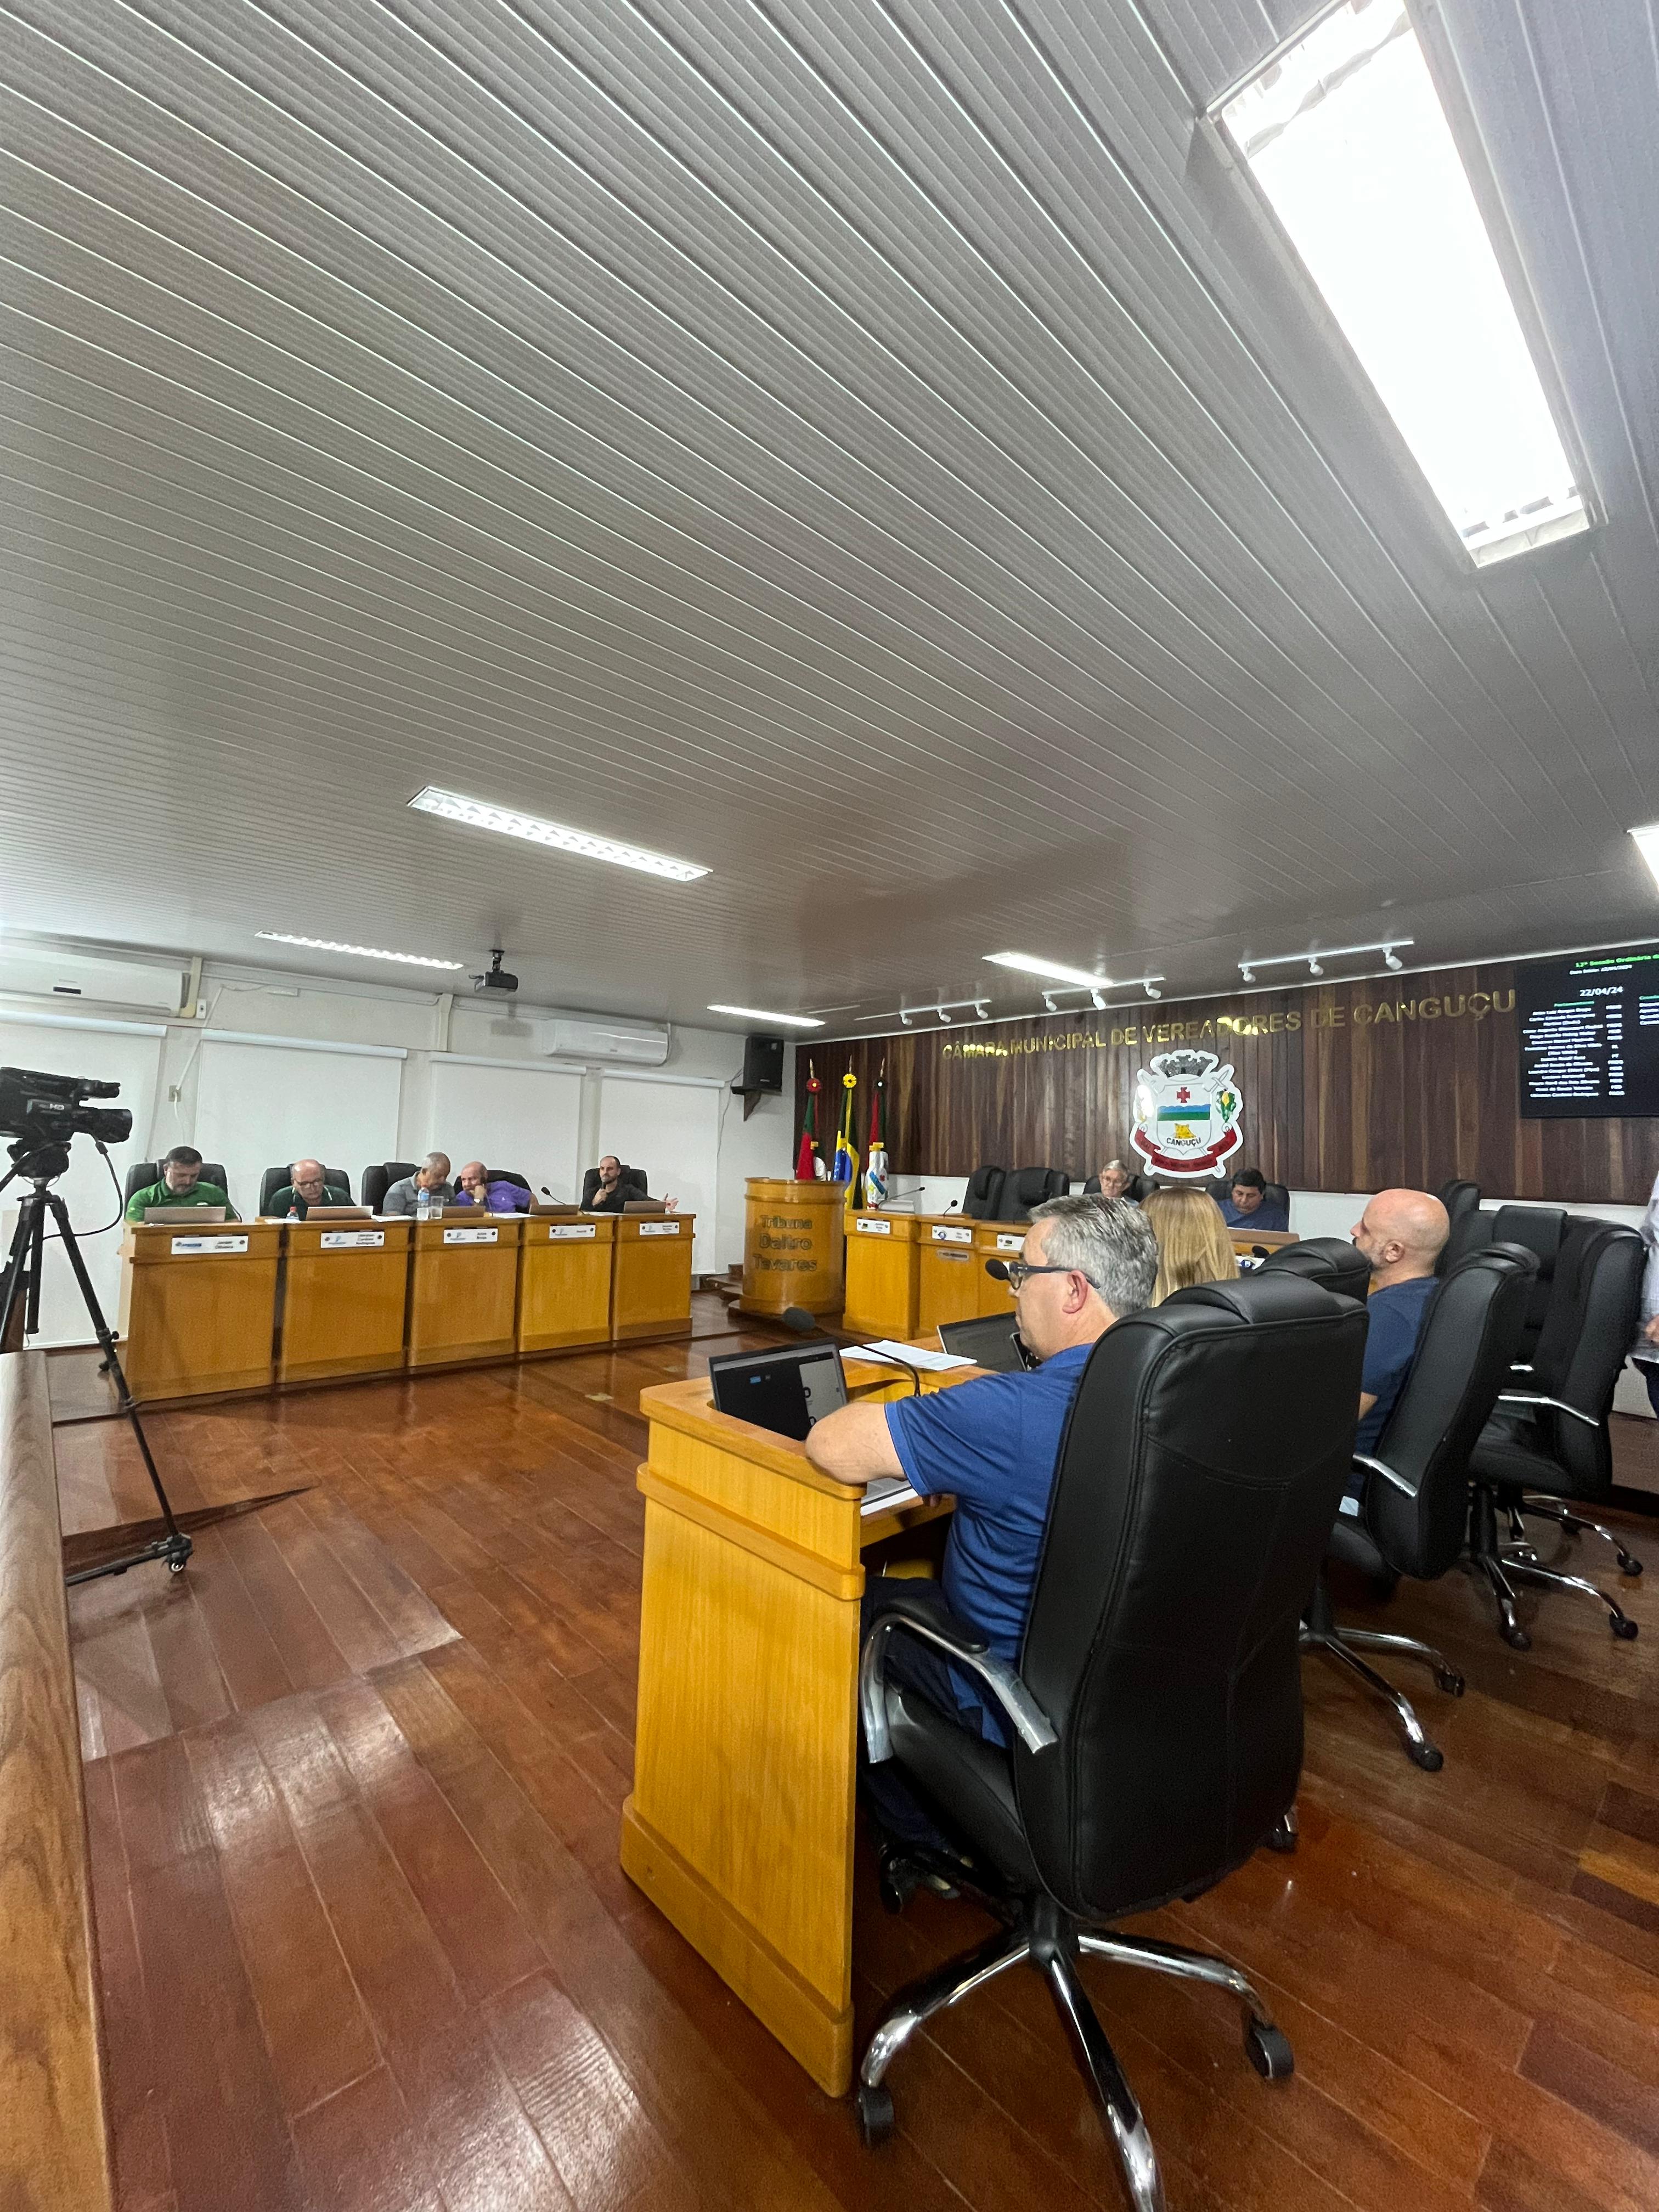 Número de vereadores diminuirá de 15 para 13 - Câmara de vereadores de Canguçu